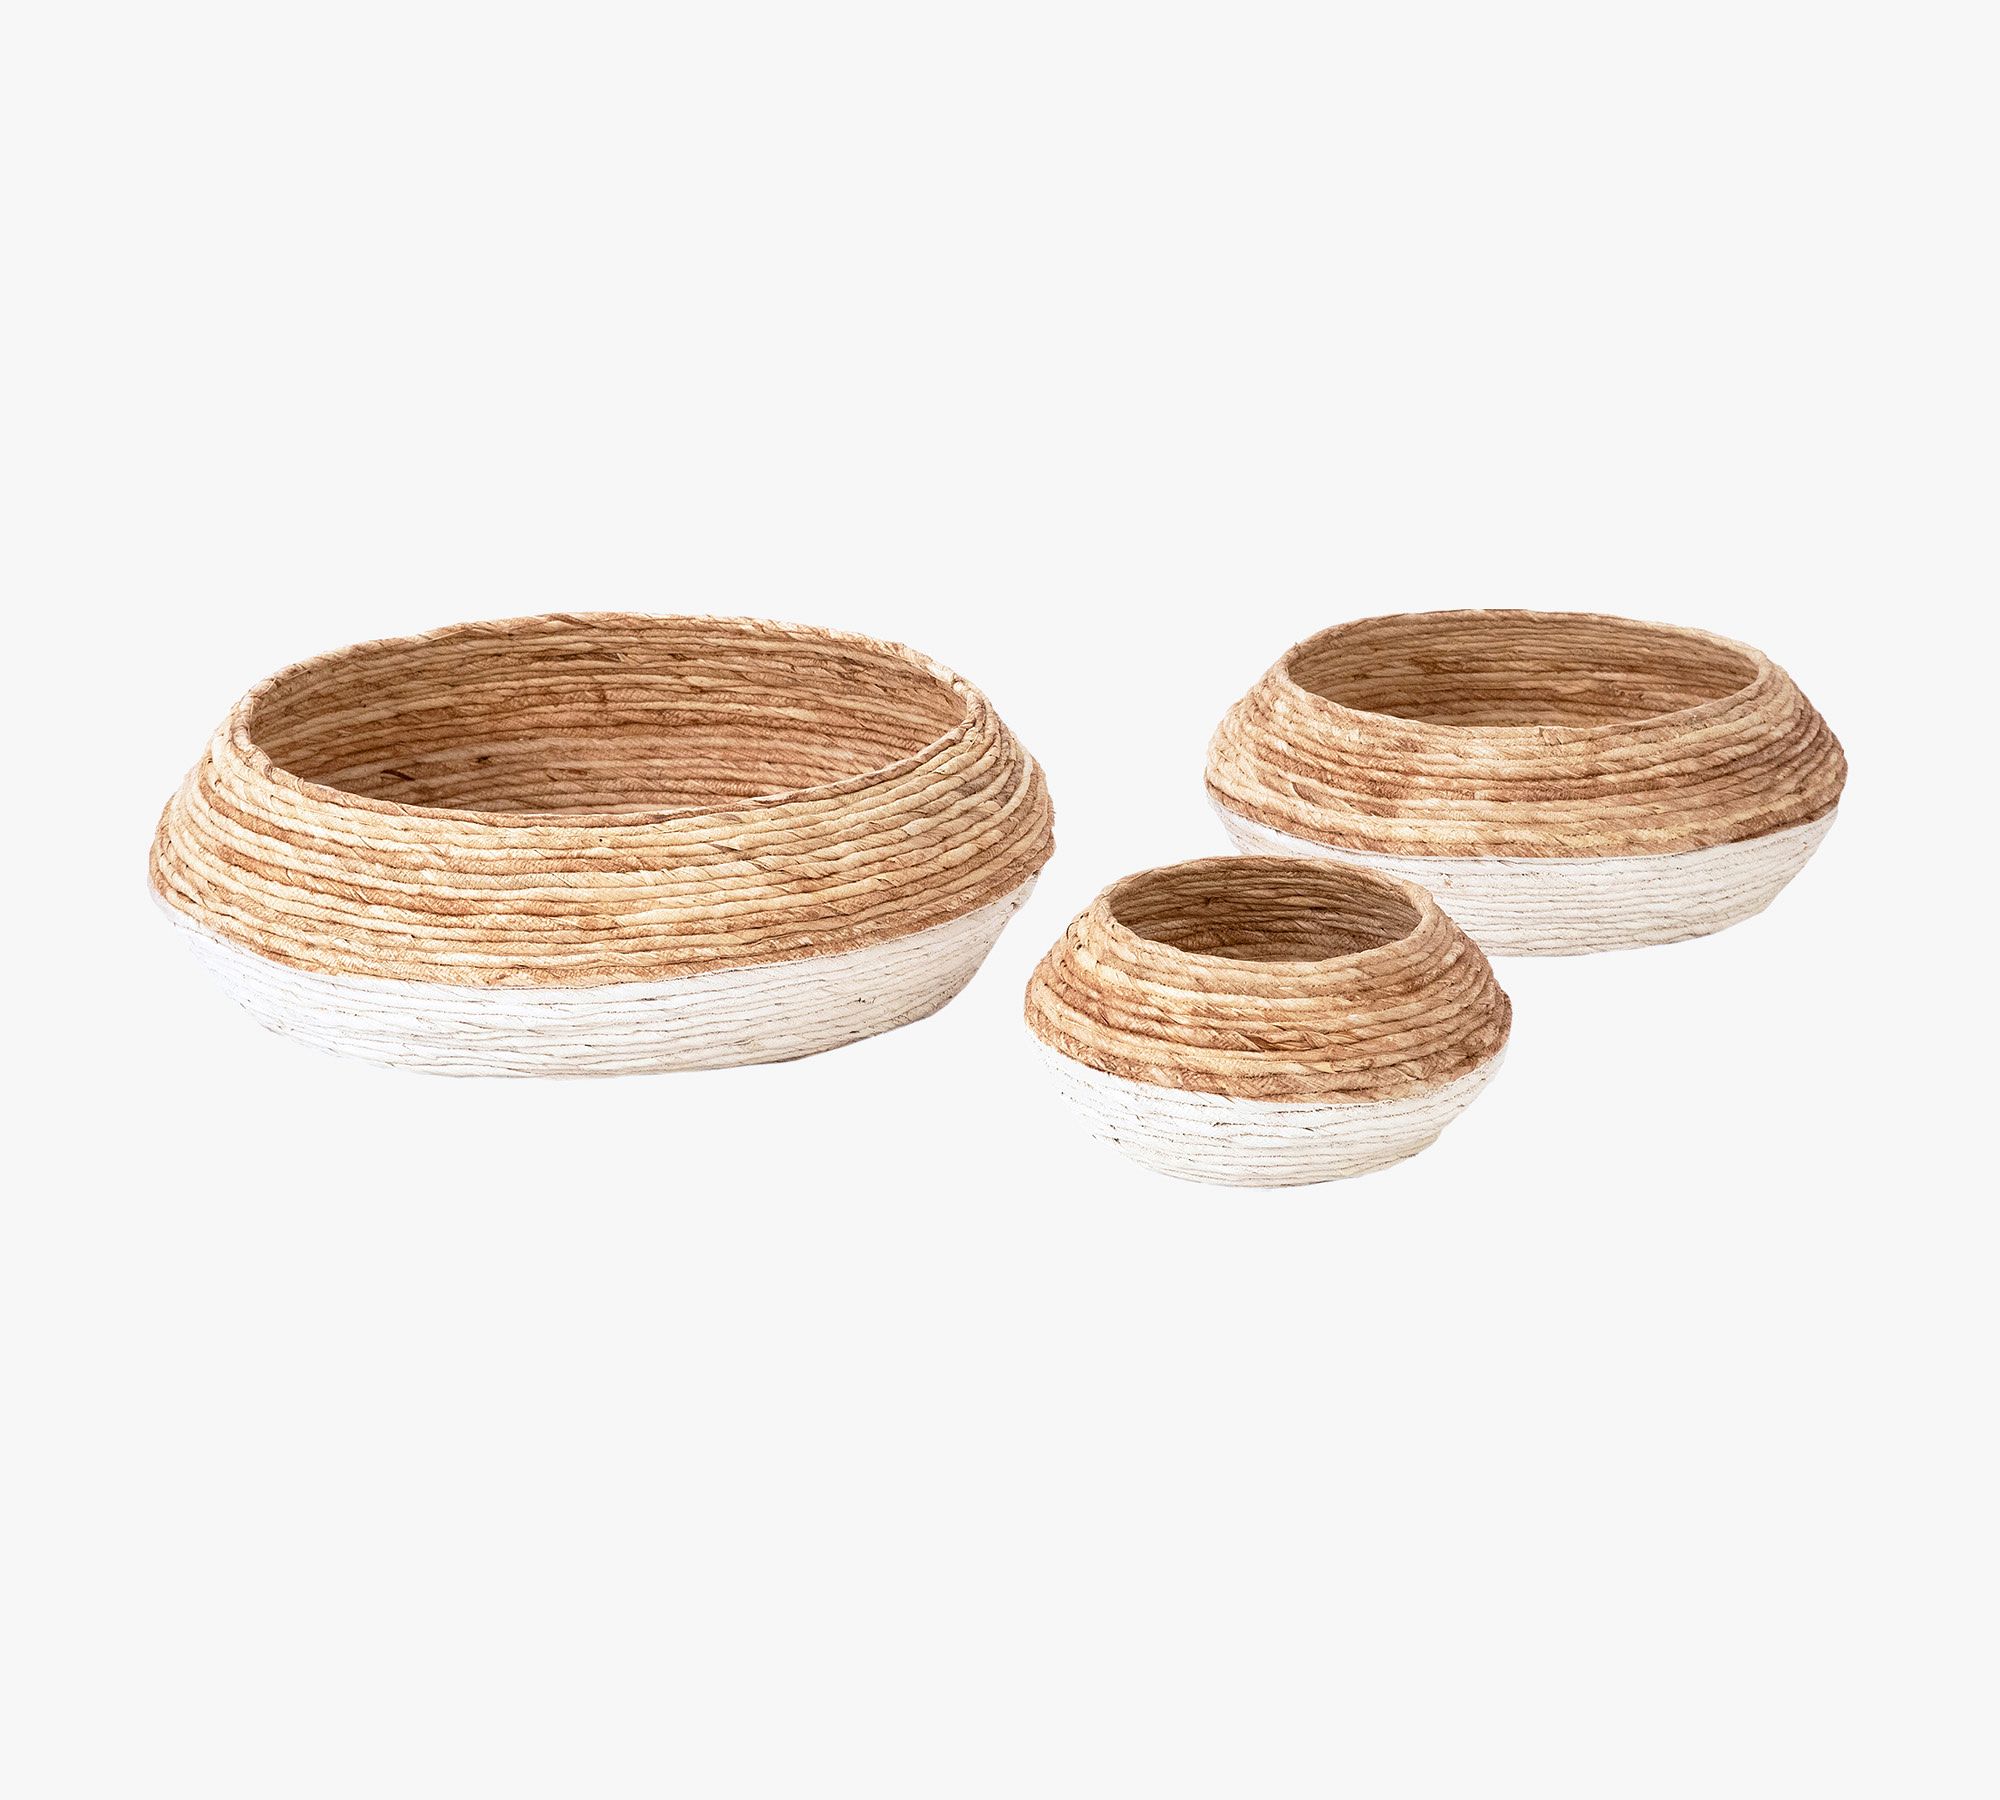 Bari Handwoven Round Abaca Baskets - Set of 3